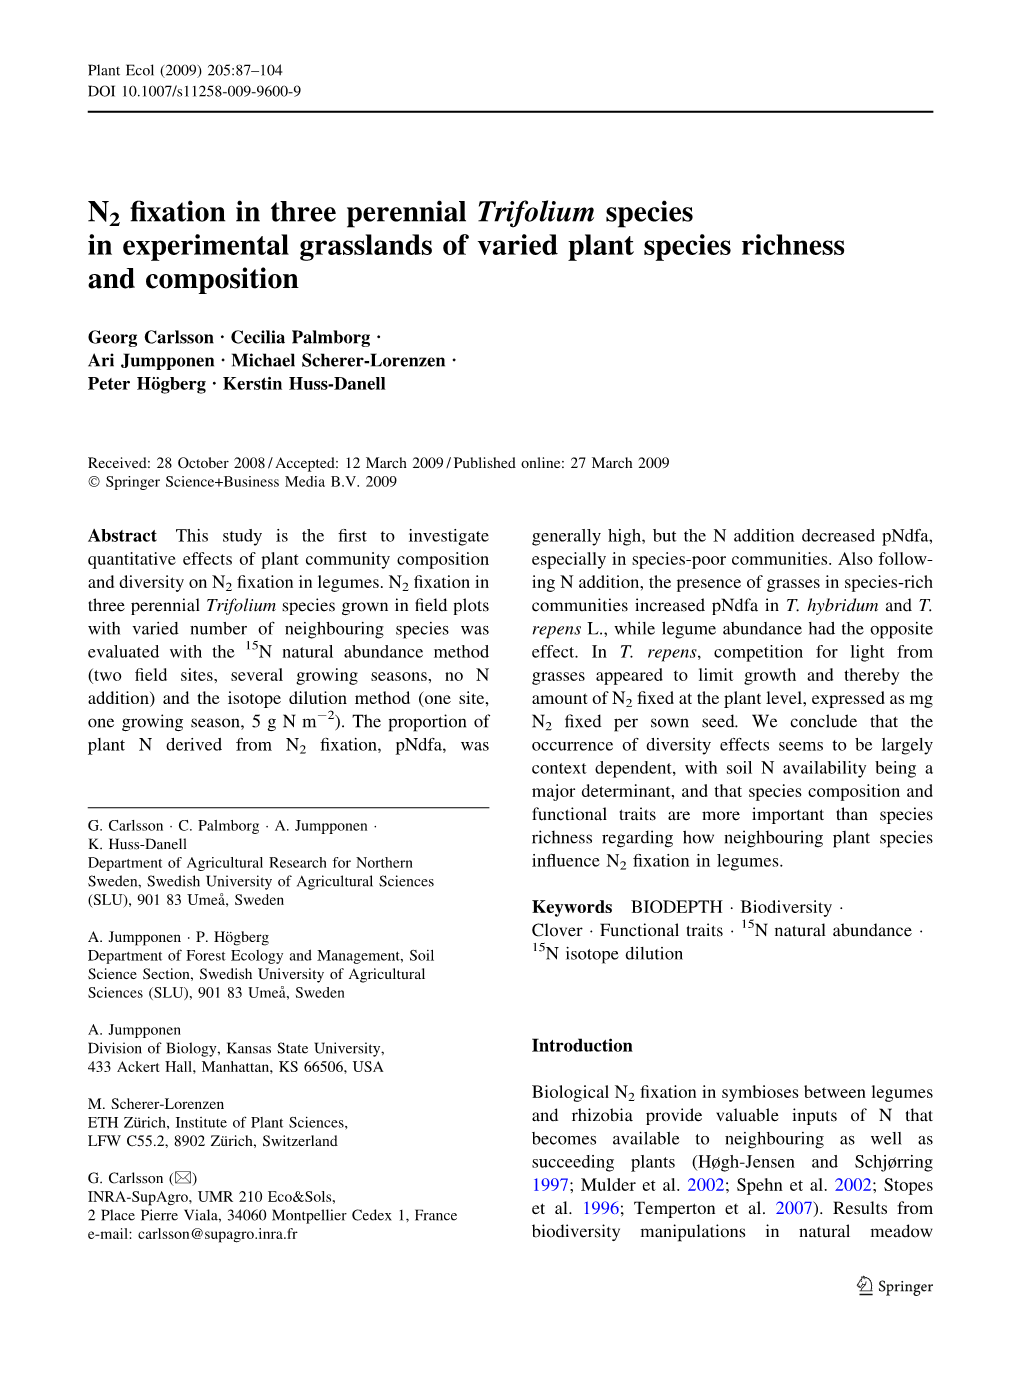 N2 Fixation in Three Perennial Trifolium Species in Experimental Grasslands